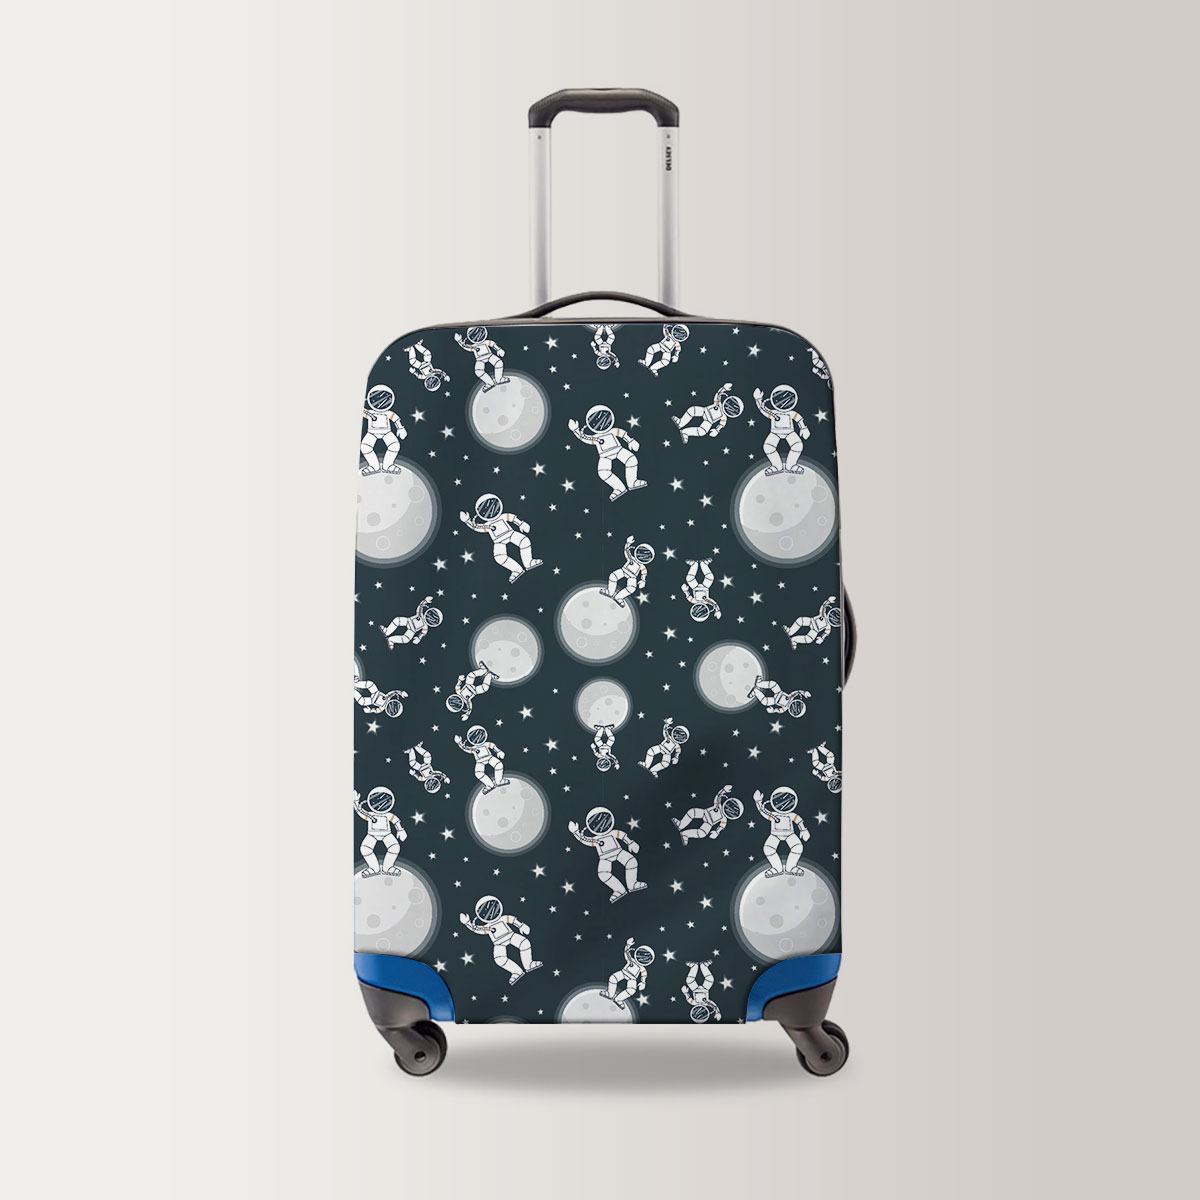 Astronaut On The Moon Luggage Bag